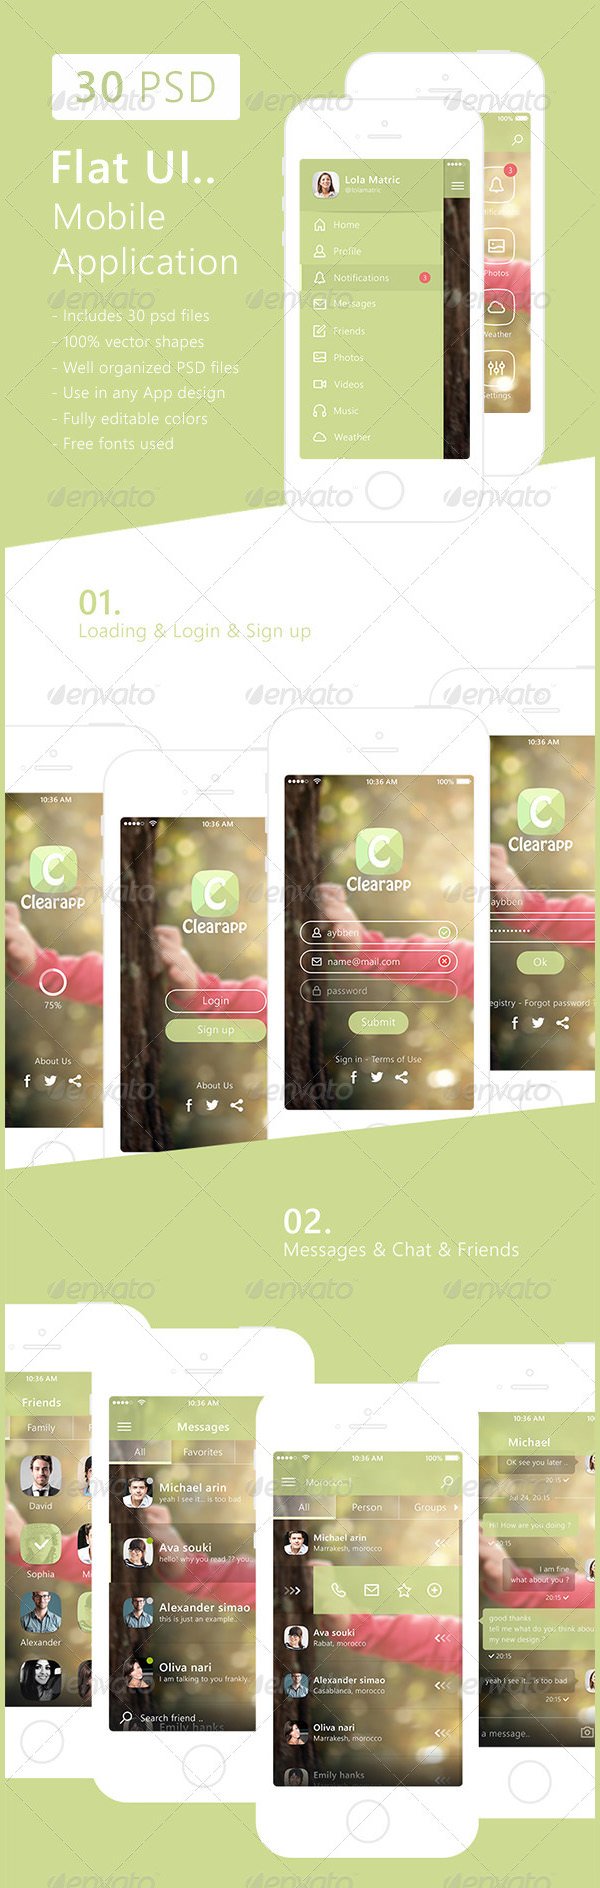 clearapp-app-ui-design